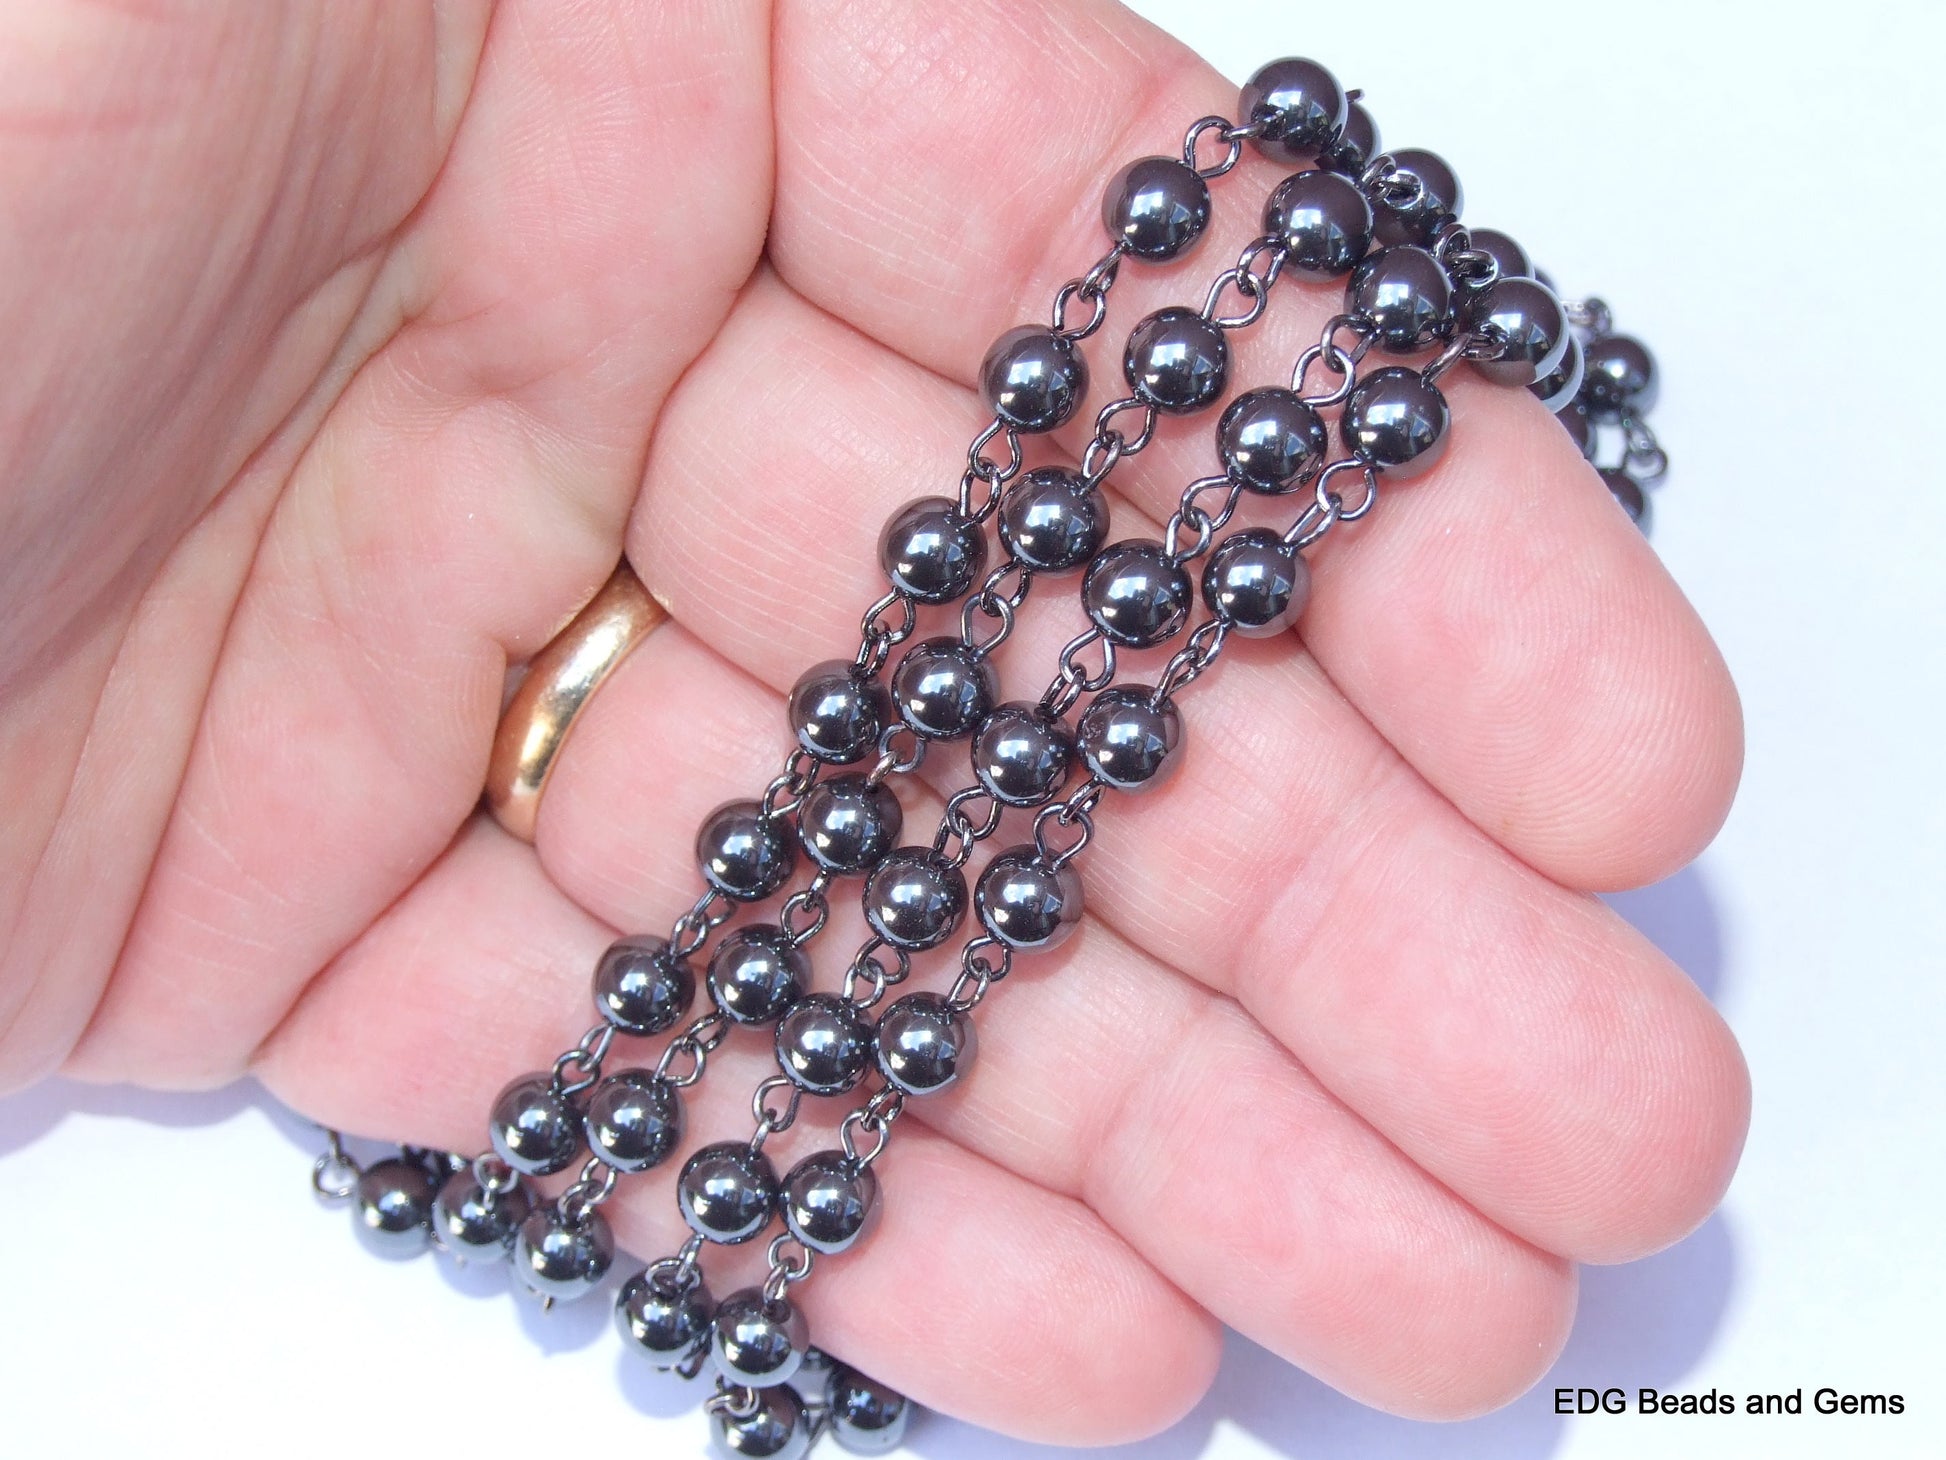 Hematite Rosary Chain, Bulk Chain, Hematite Beads, Beaded Chain, Body Chain Jewelry, Non-Magnetic, Necklace Chain, Belly Chain, 1 Meter, 6mm